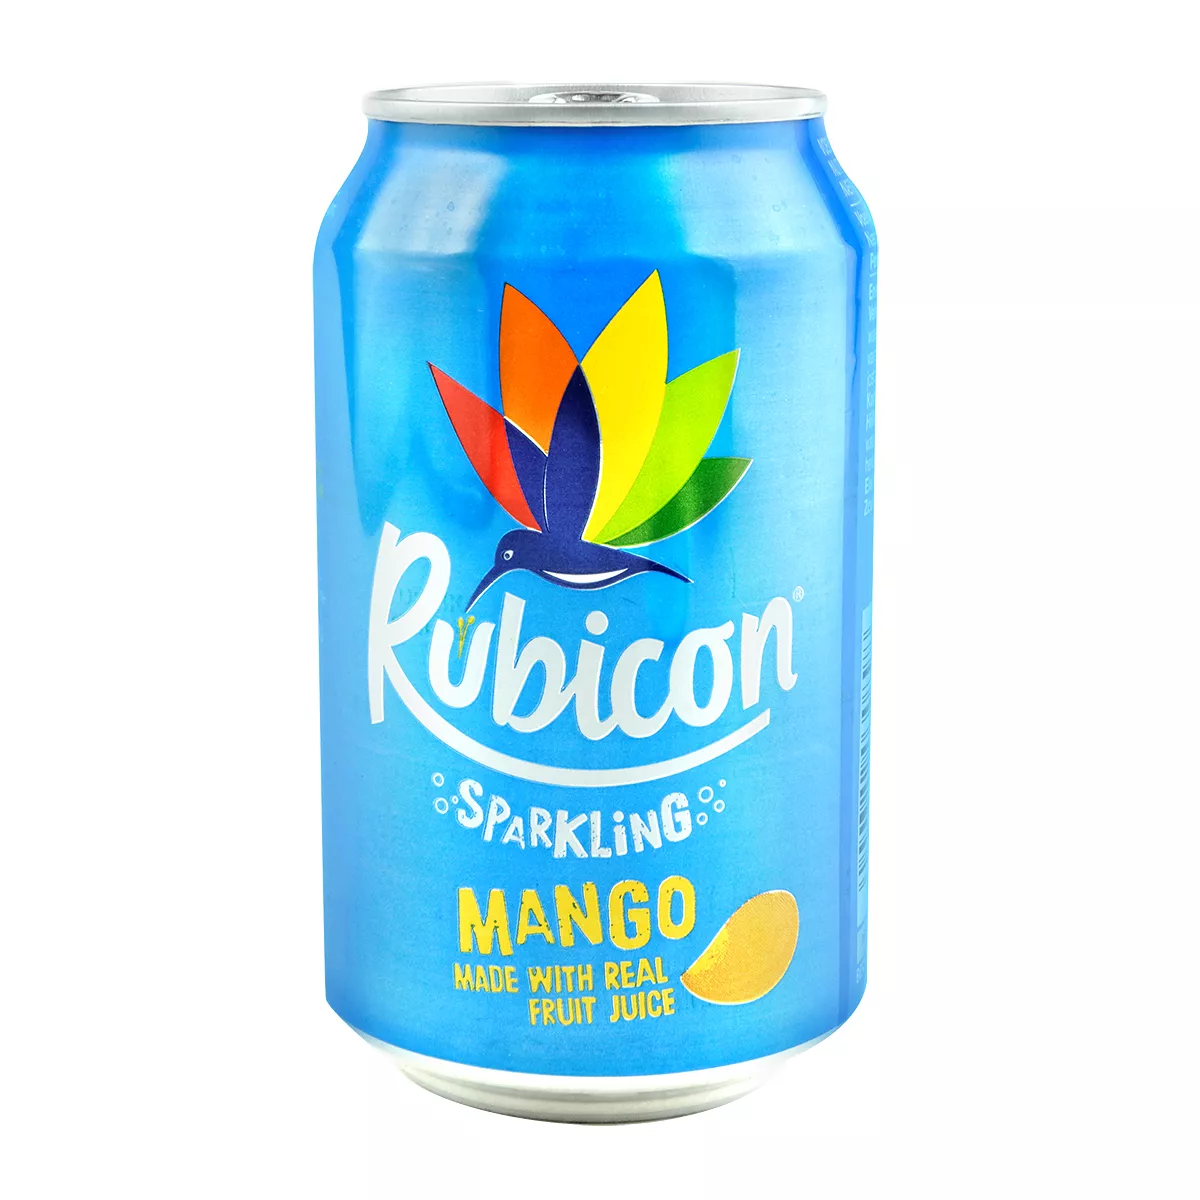 Bautura carbogazoasa cu mango RUBICON 330ml, [],asianfood.ro